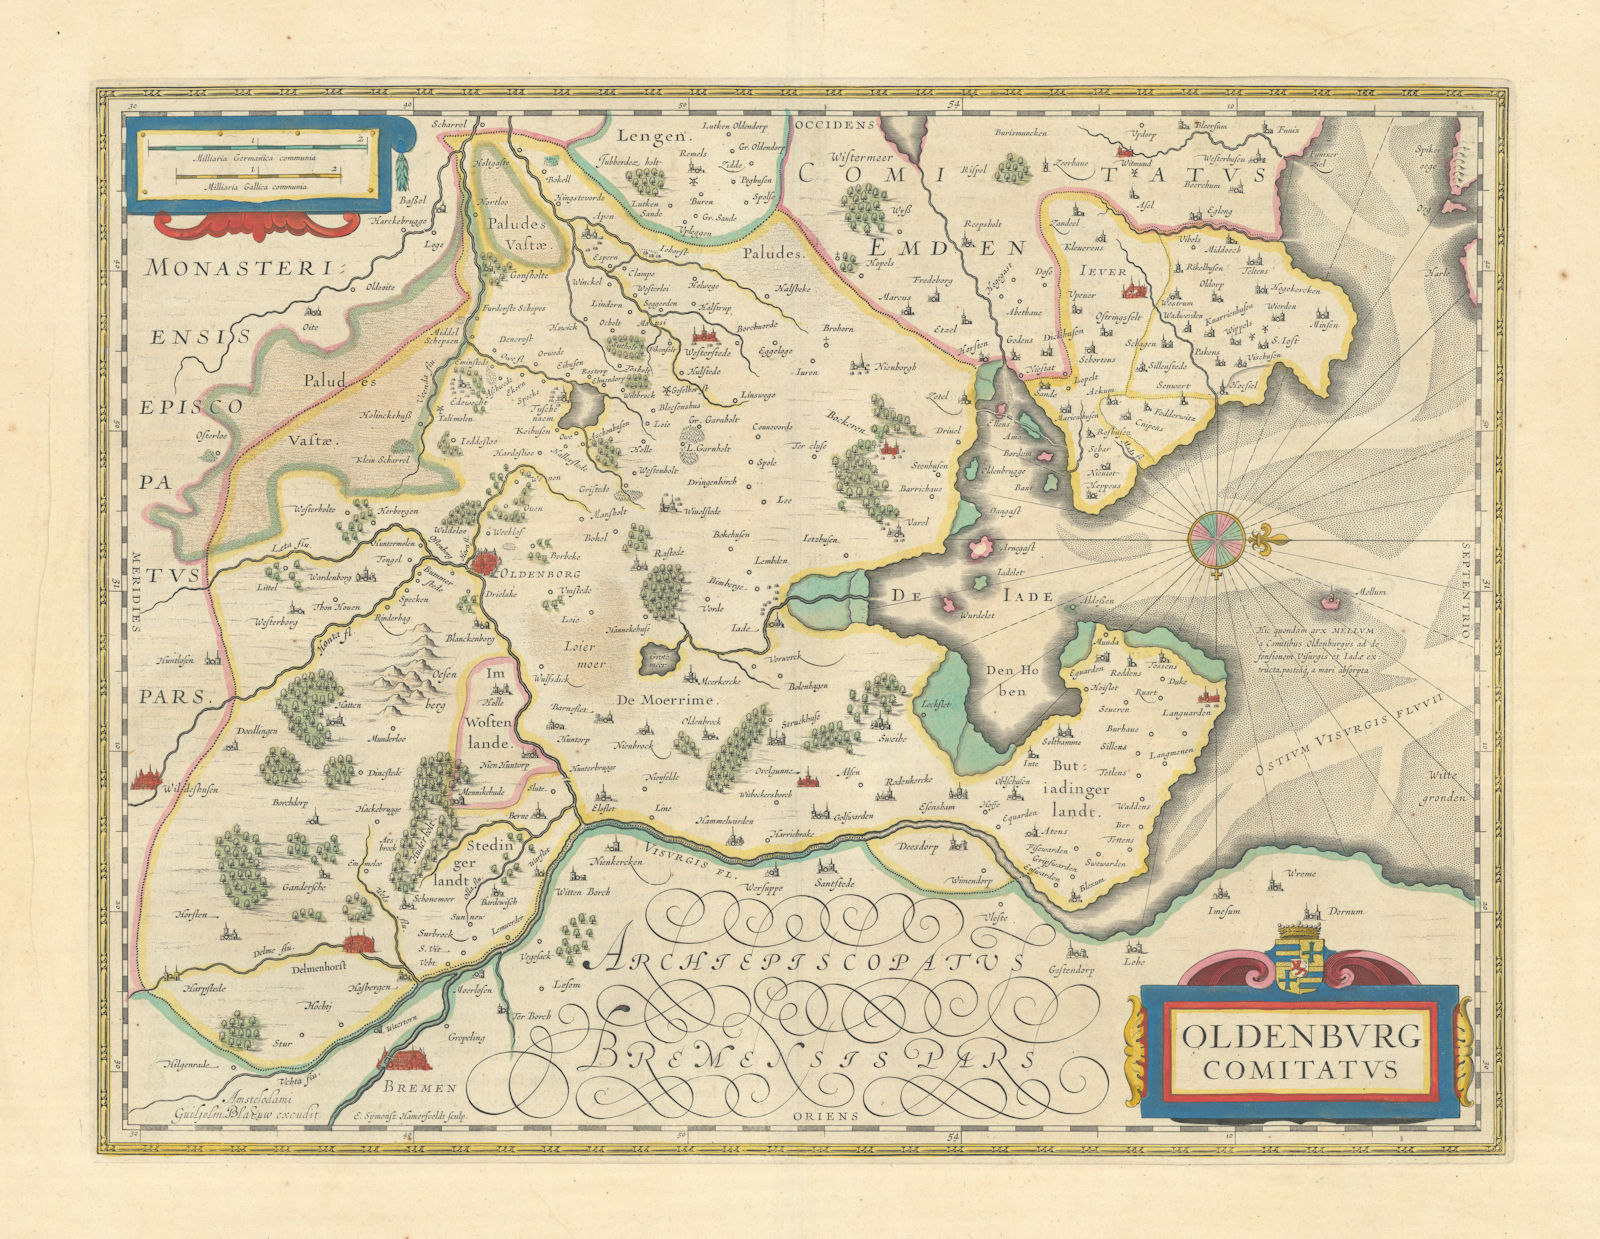 Oldenburg Comitatus. County of Oldenburg by Blaeu. Lower Saxony 1645 map